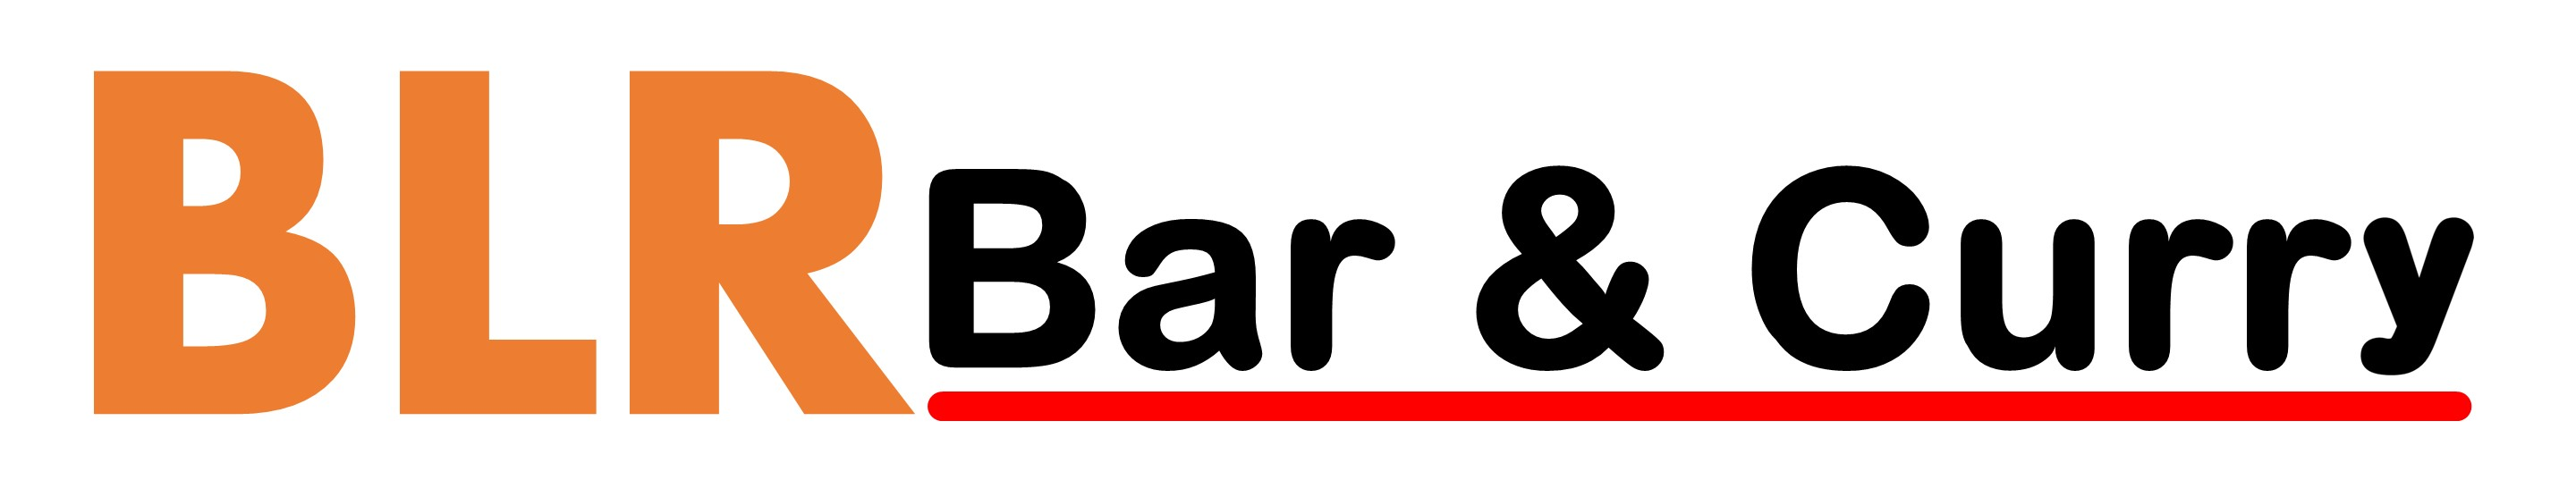 BLR Bar & Curry logo top - Homepage